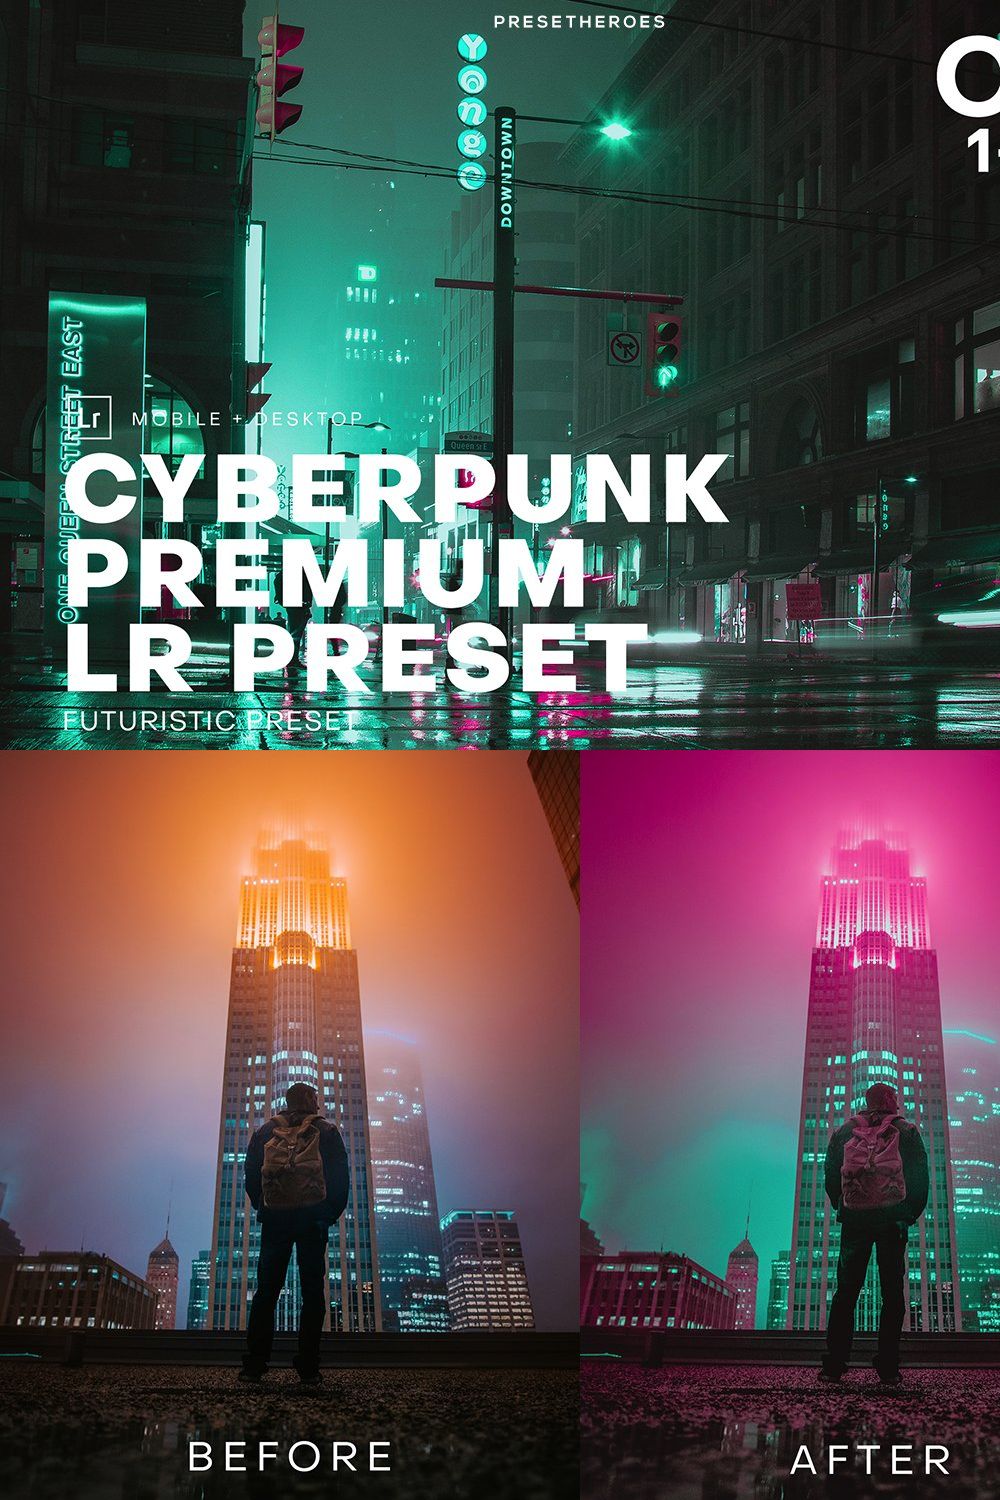 Cyberpunk Futuristic Lightroom pinterest preview image.